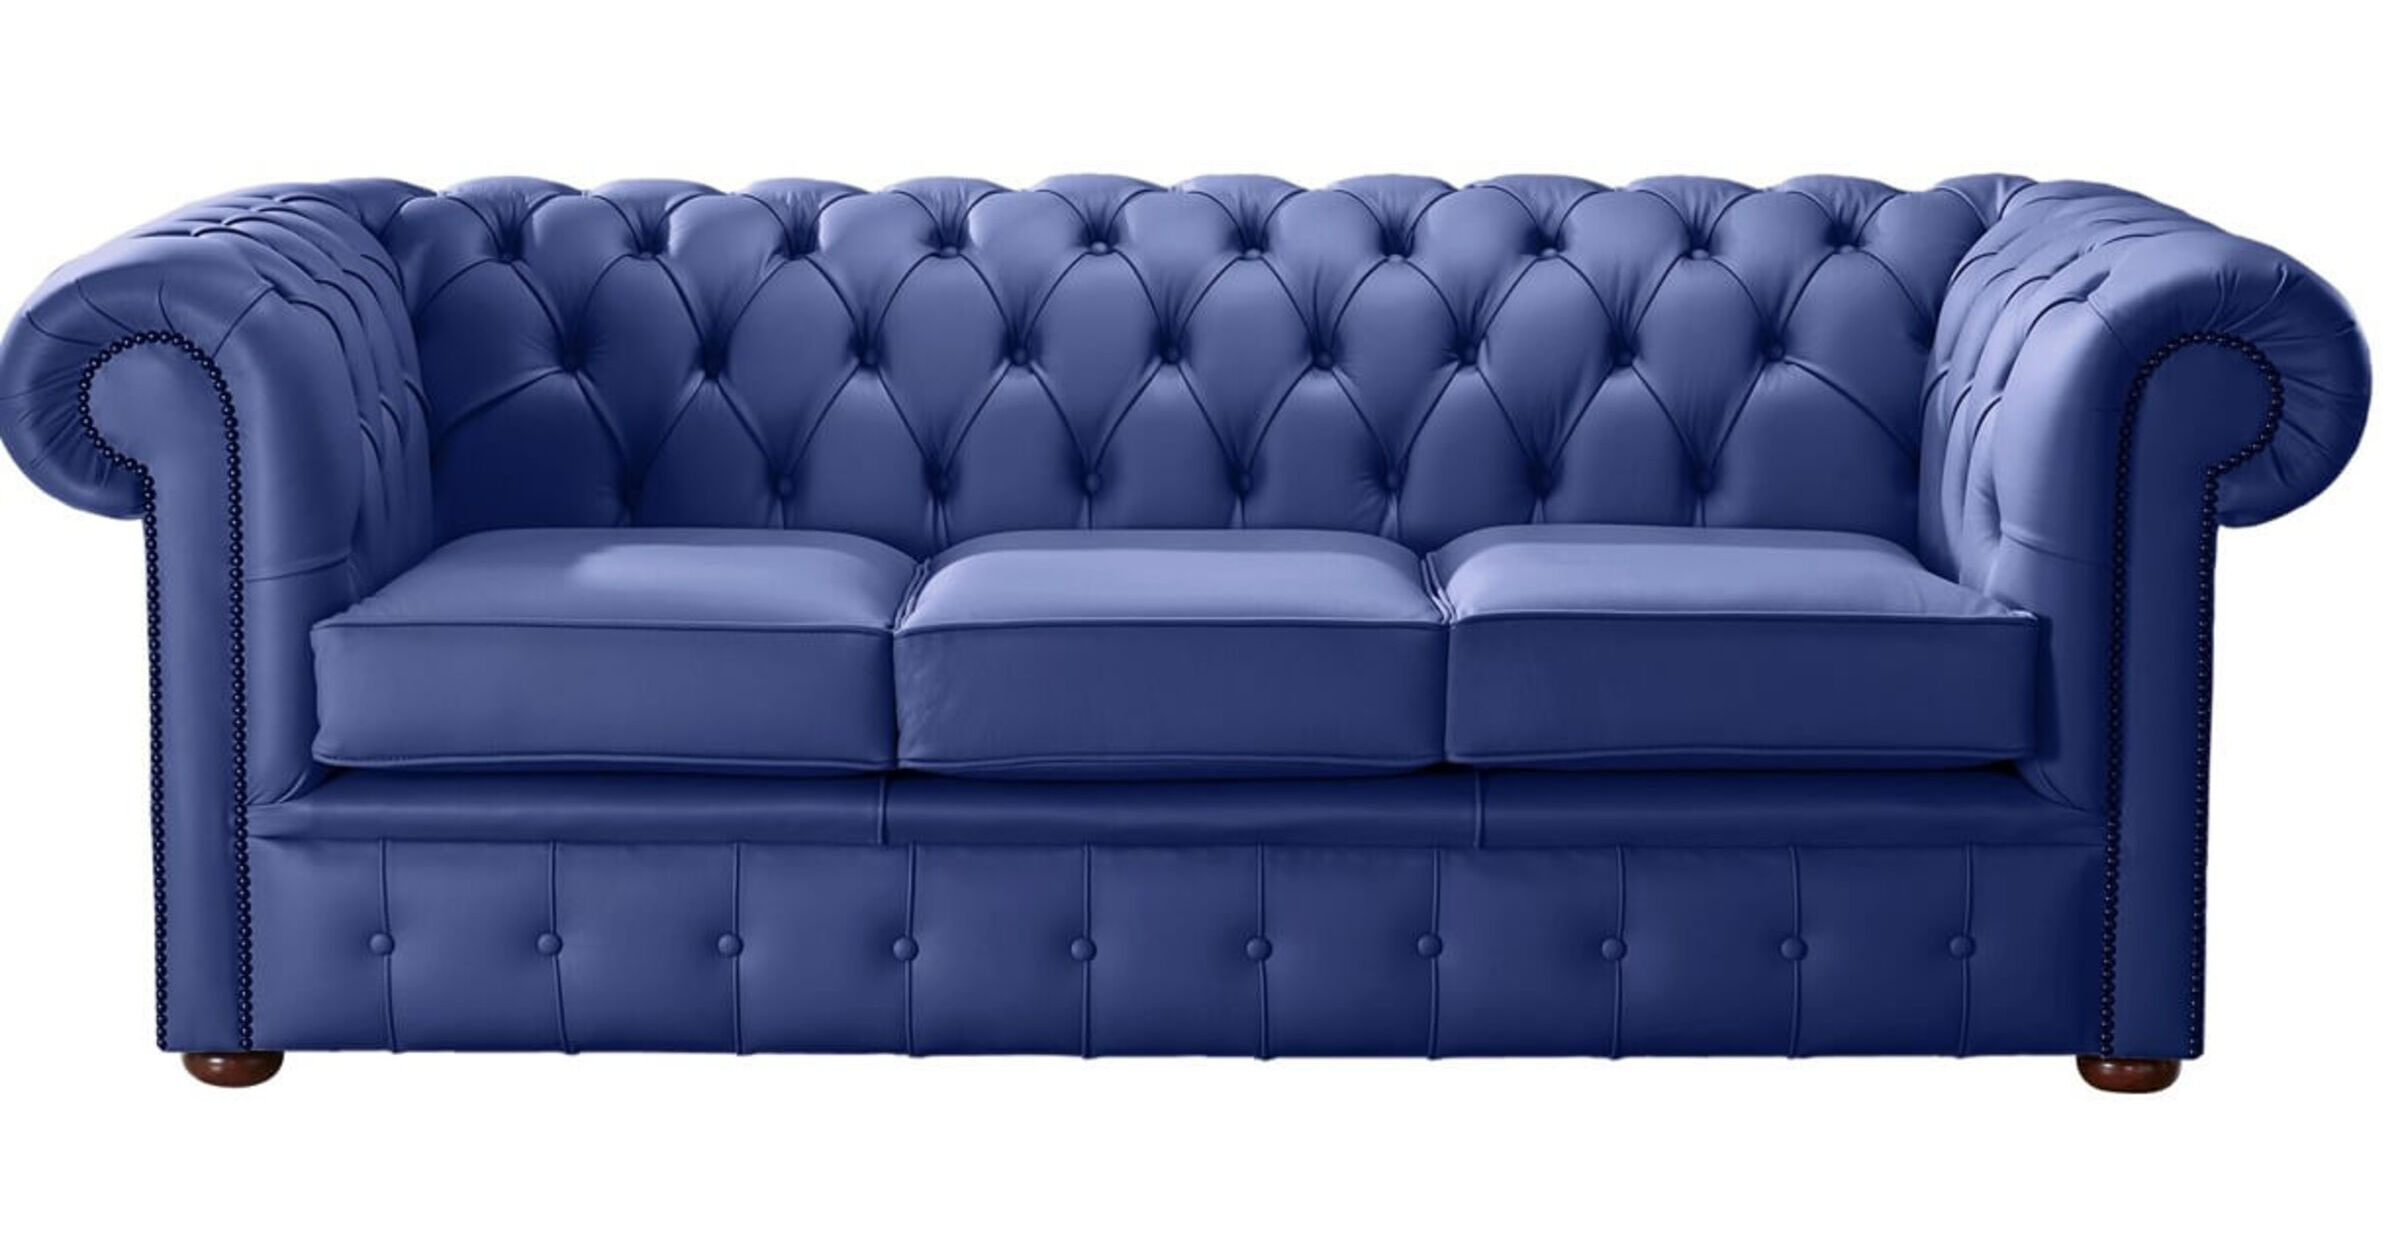 blue leather chesterfield sofa ebay